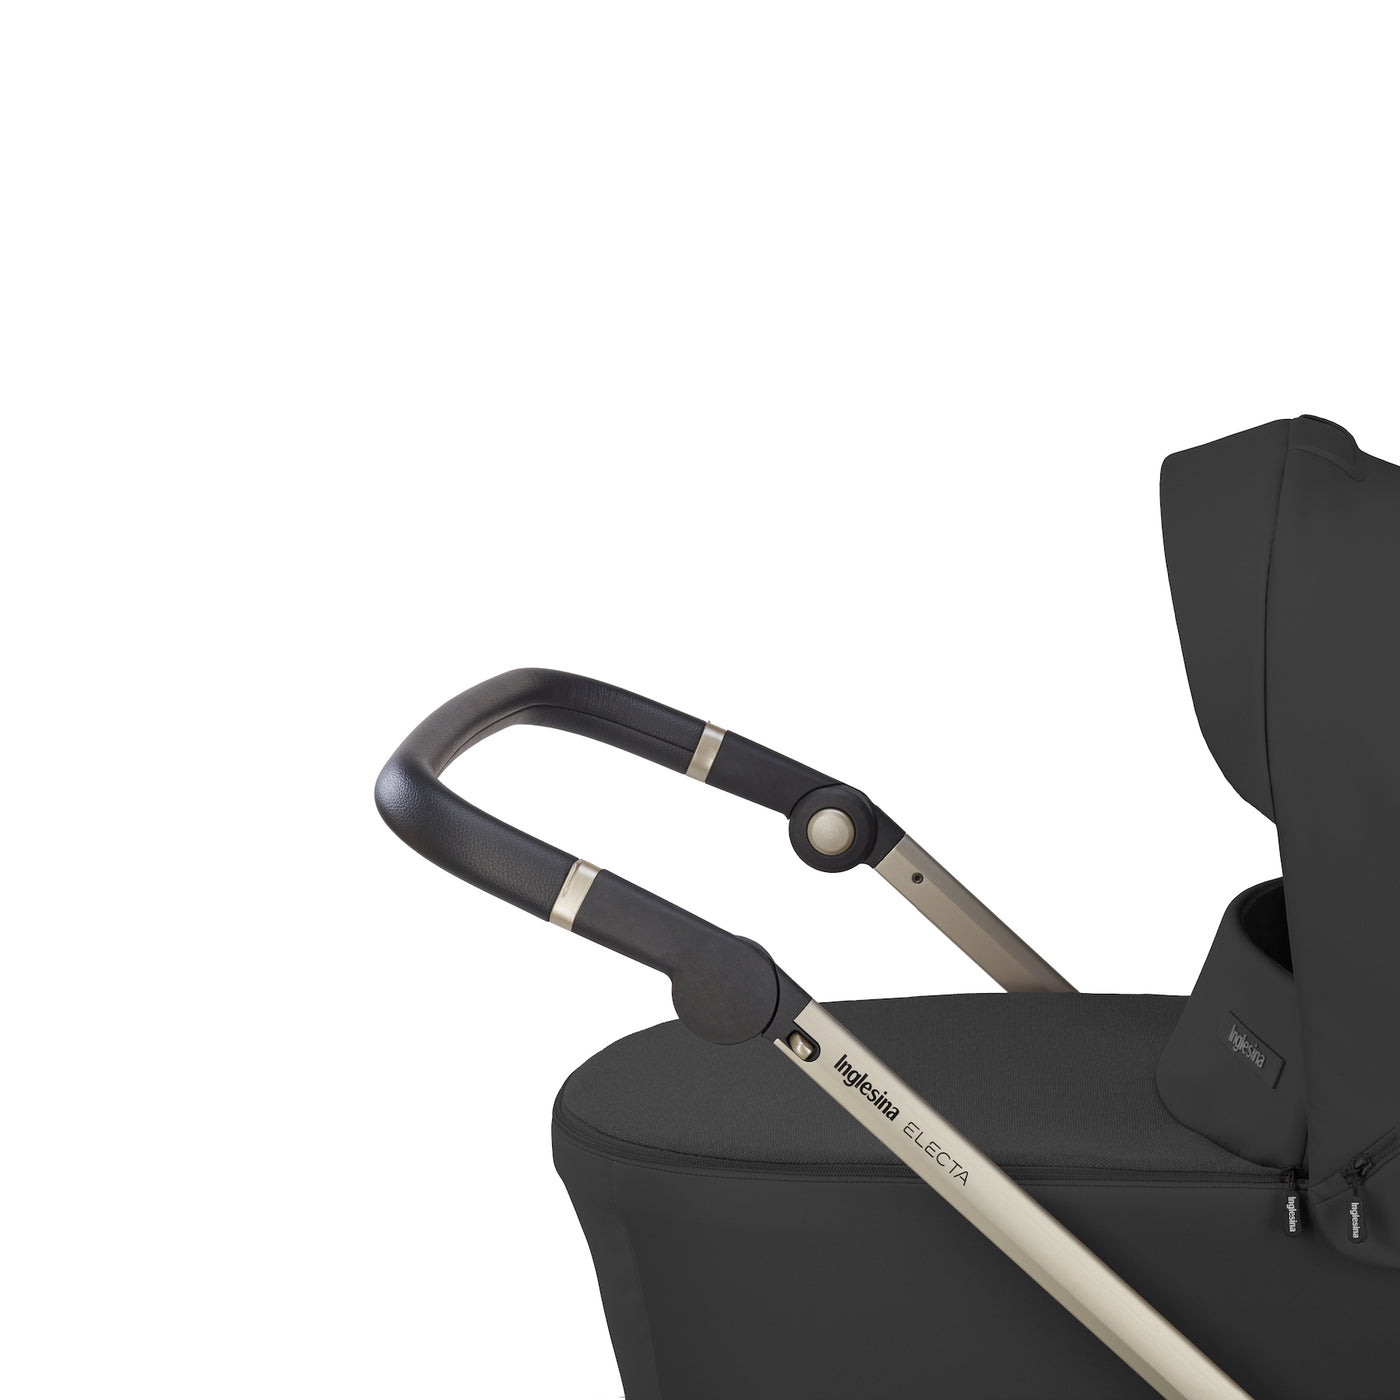 Inglesina Electa stroller frame upper black with adjustable handle for petit and tall parents alike, 4 position adjustable handle